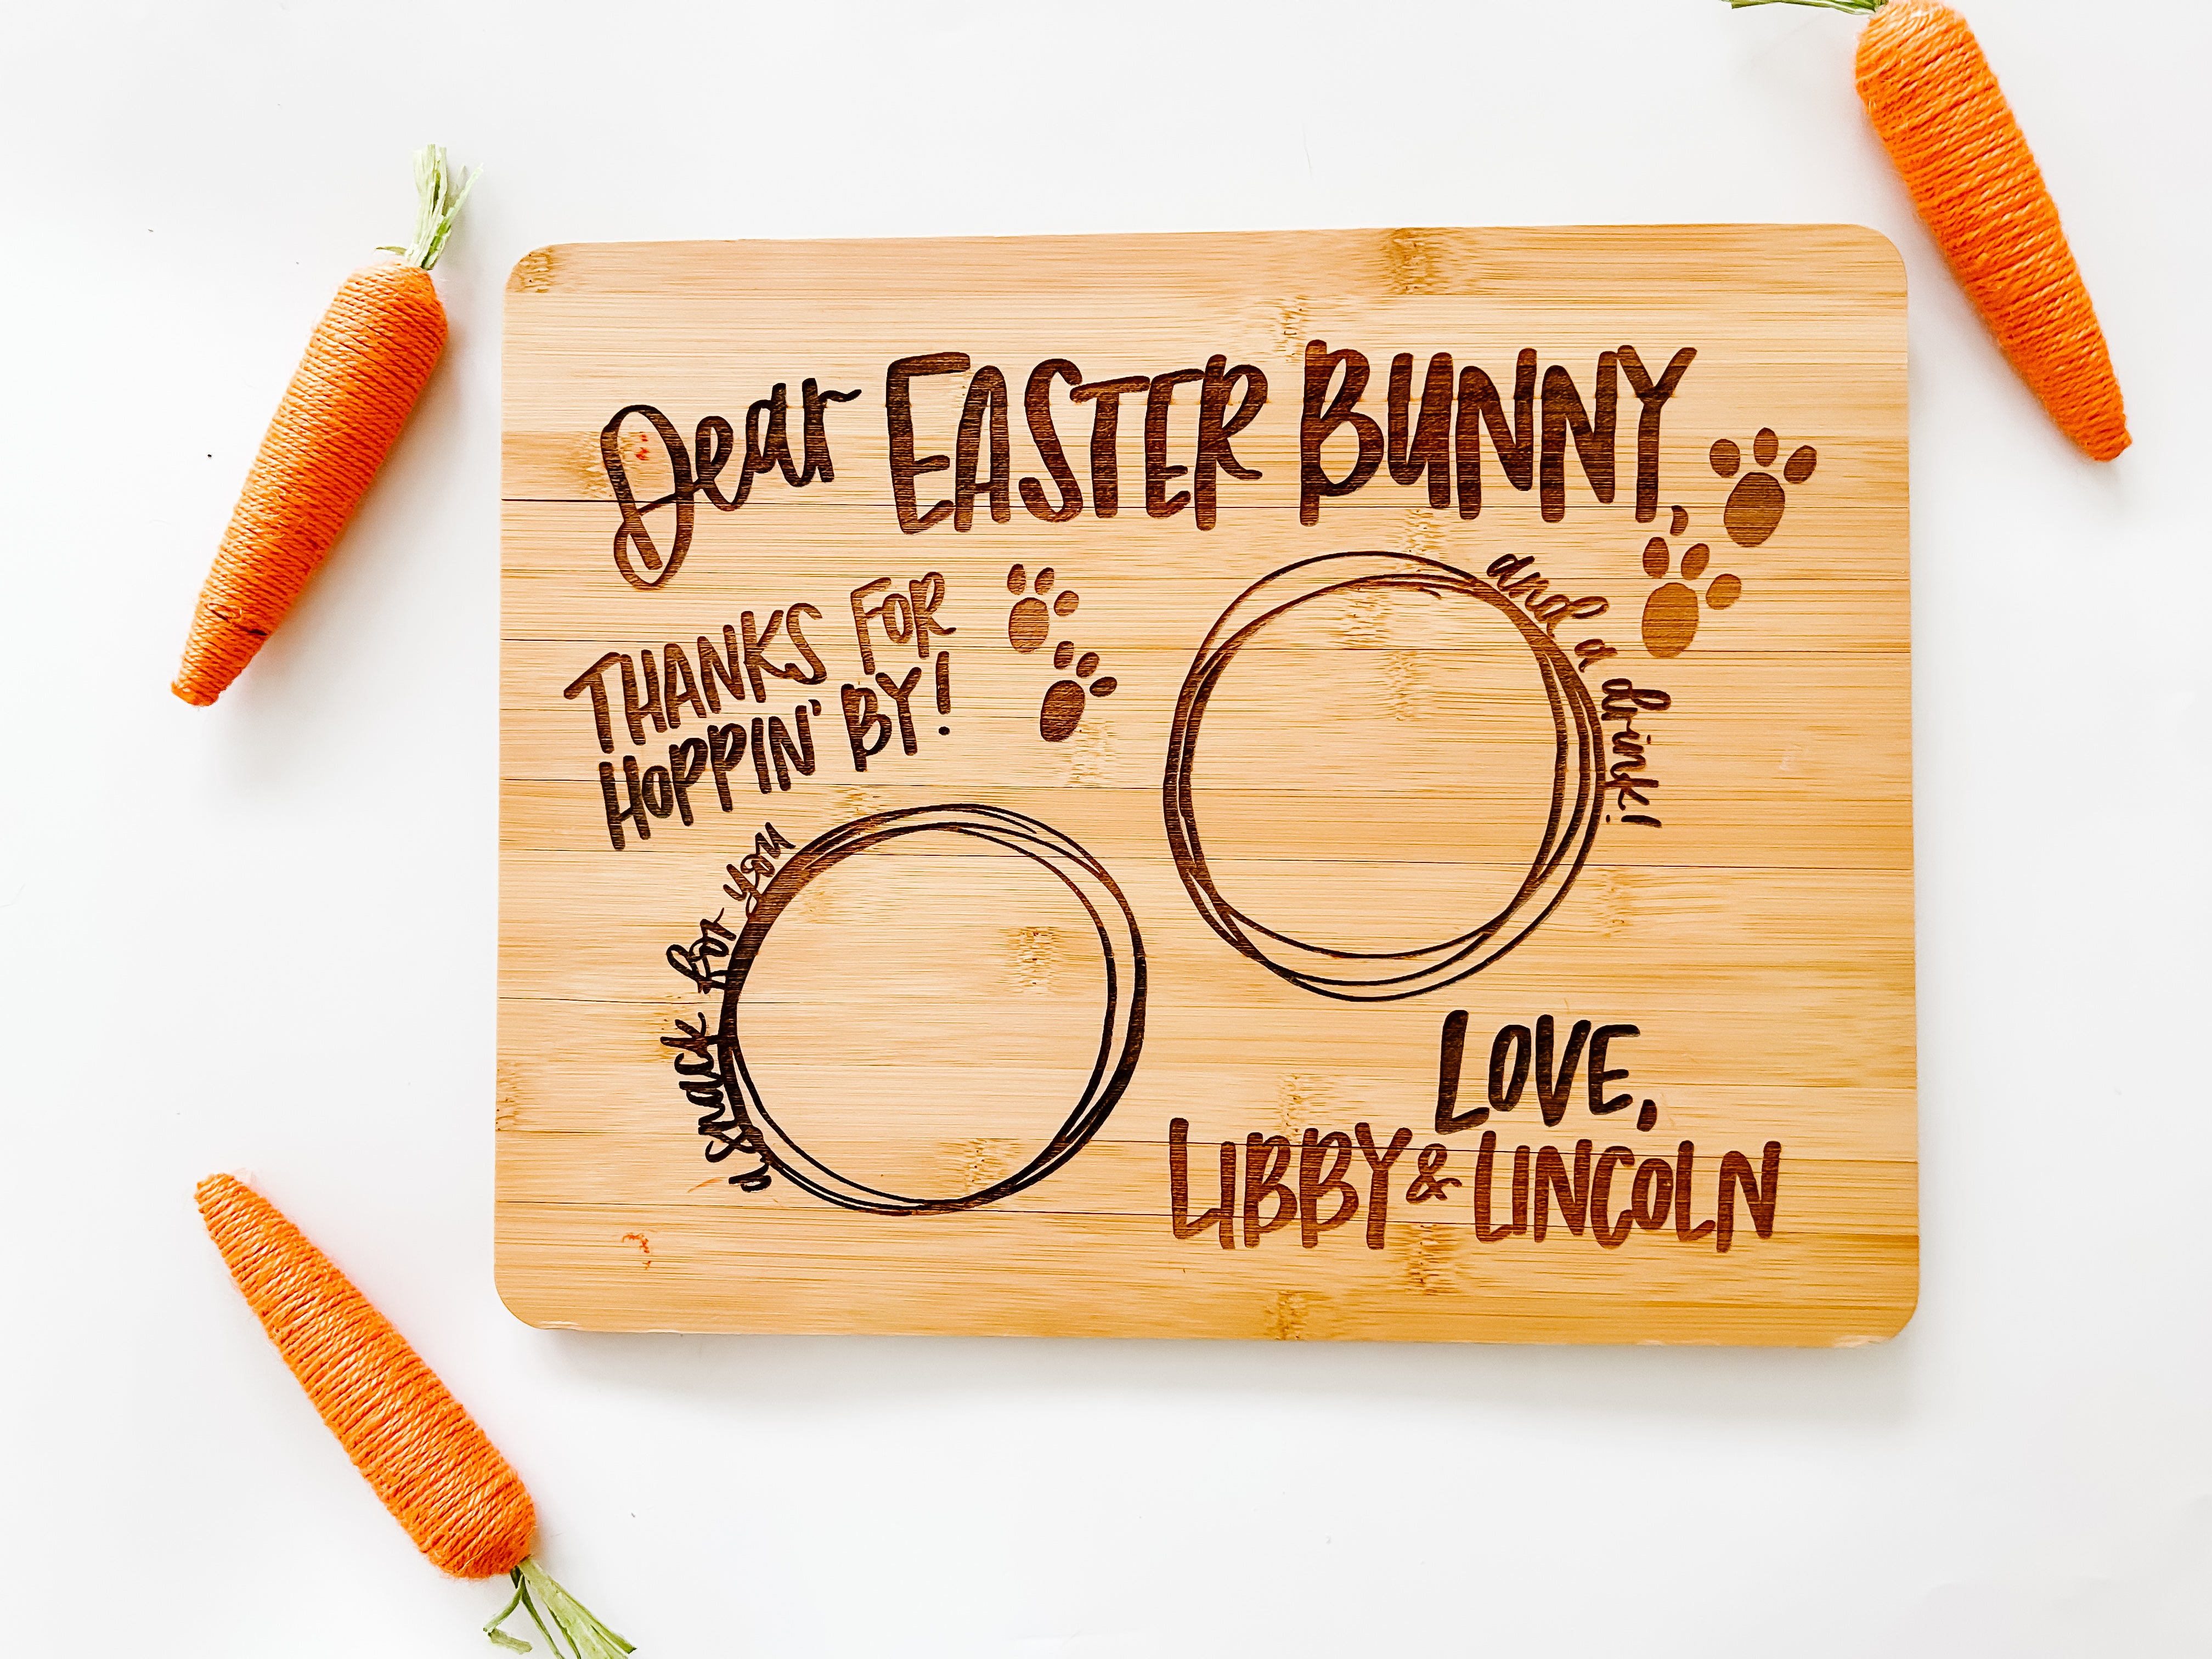 Easter Bunny Tray